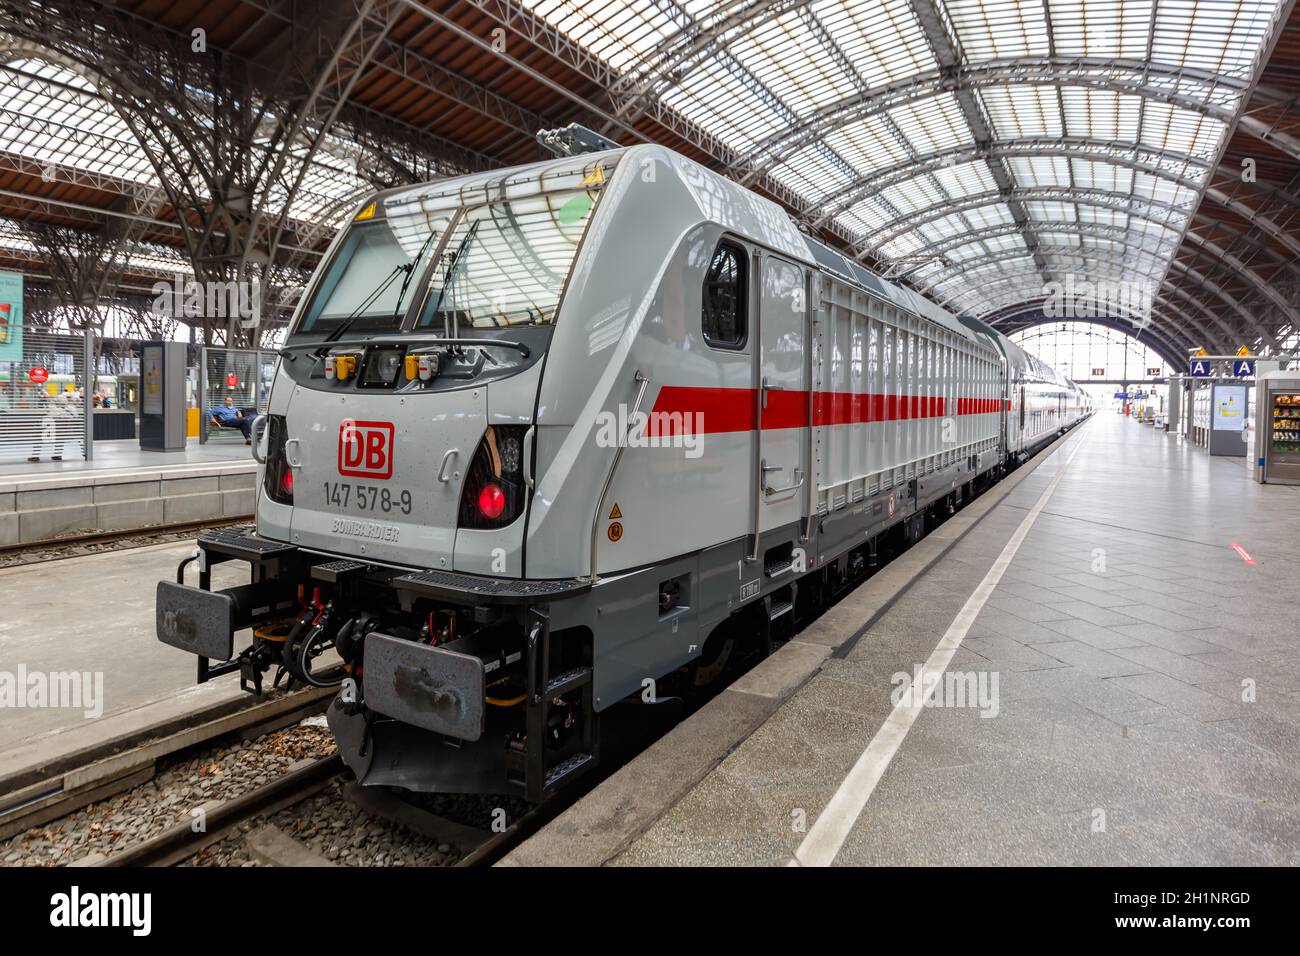 Leipzig, Germany - August 19, 2020: IC2 Intercity 2 locomotive train at Leipzig main station railway in Germany. Stock Photo